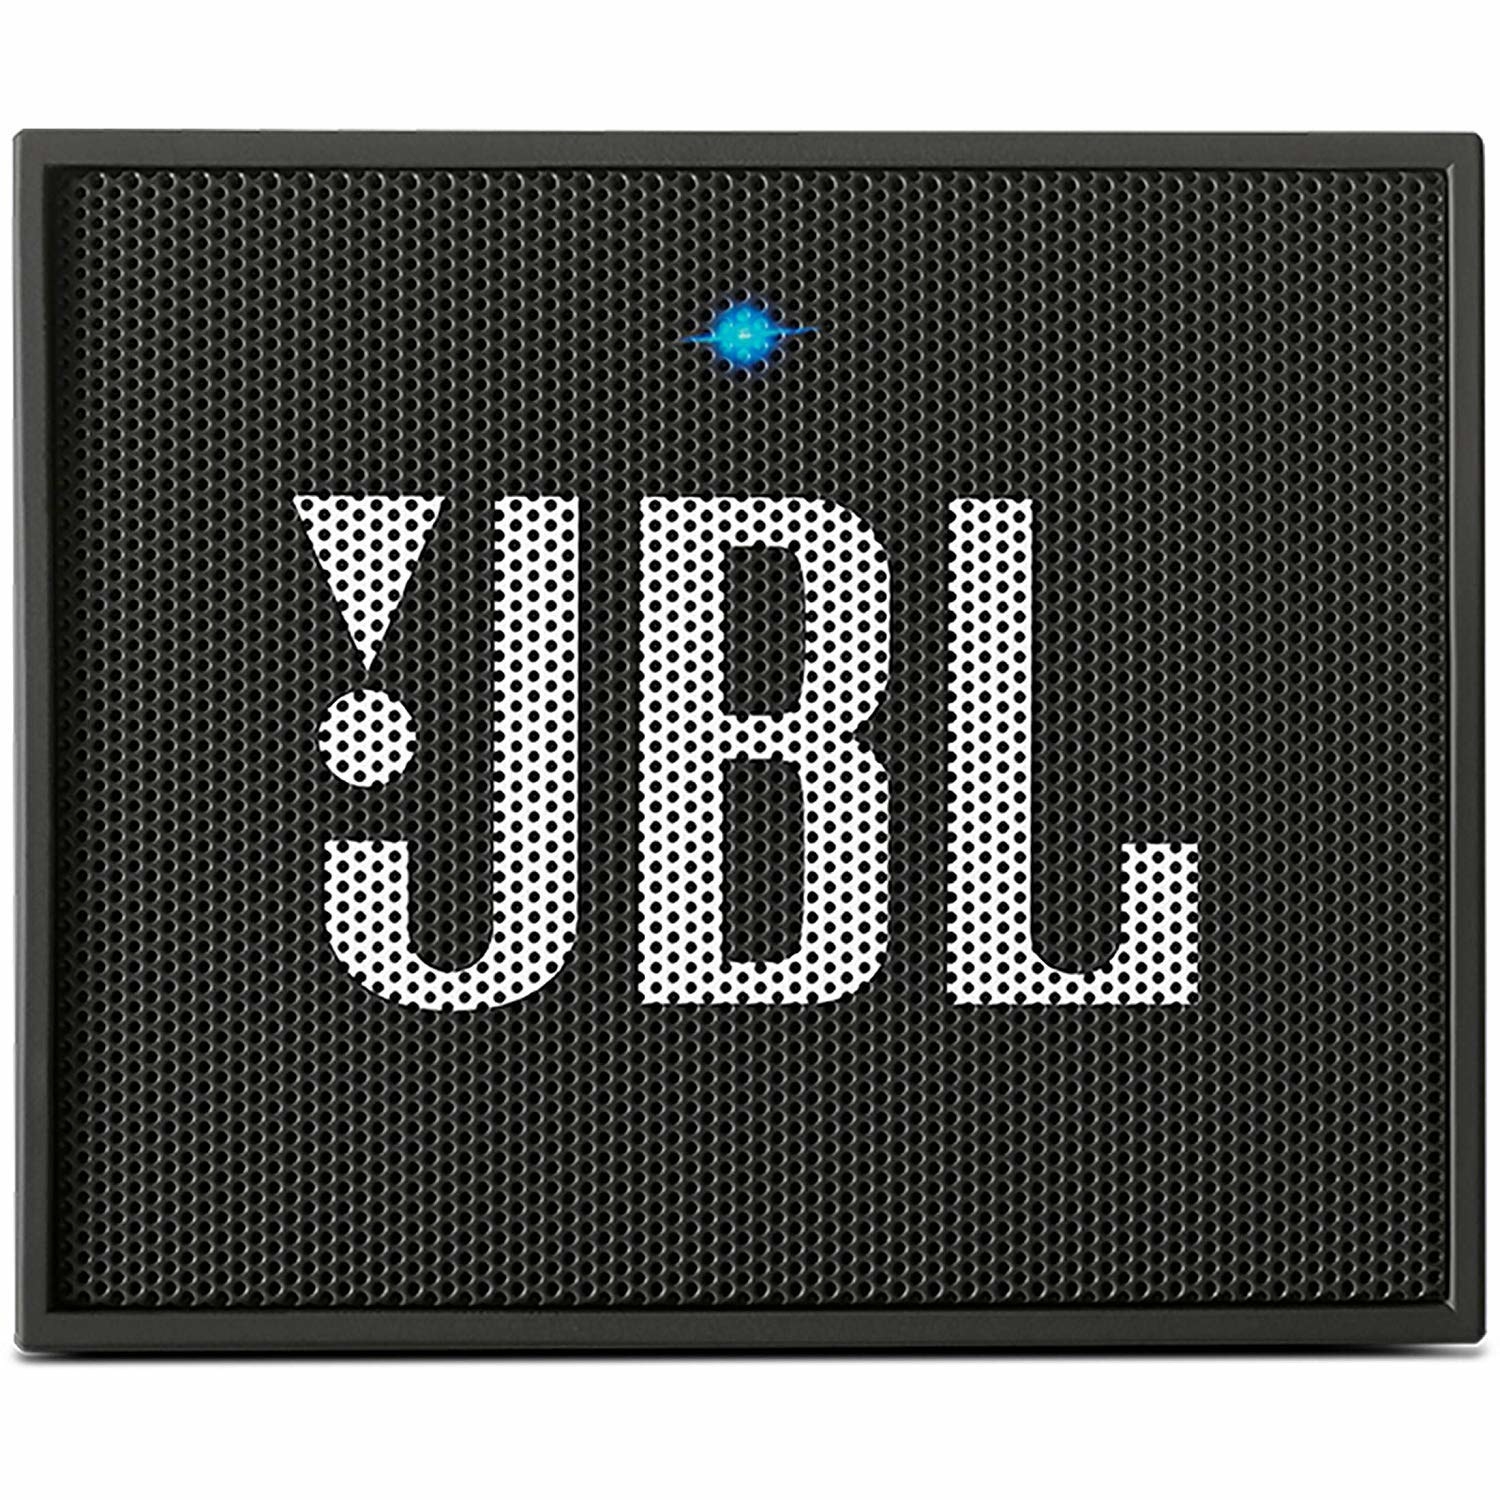 A black JBL speaker